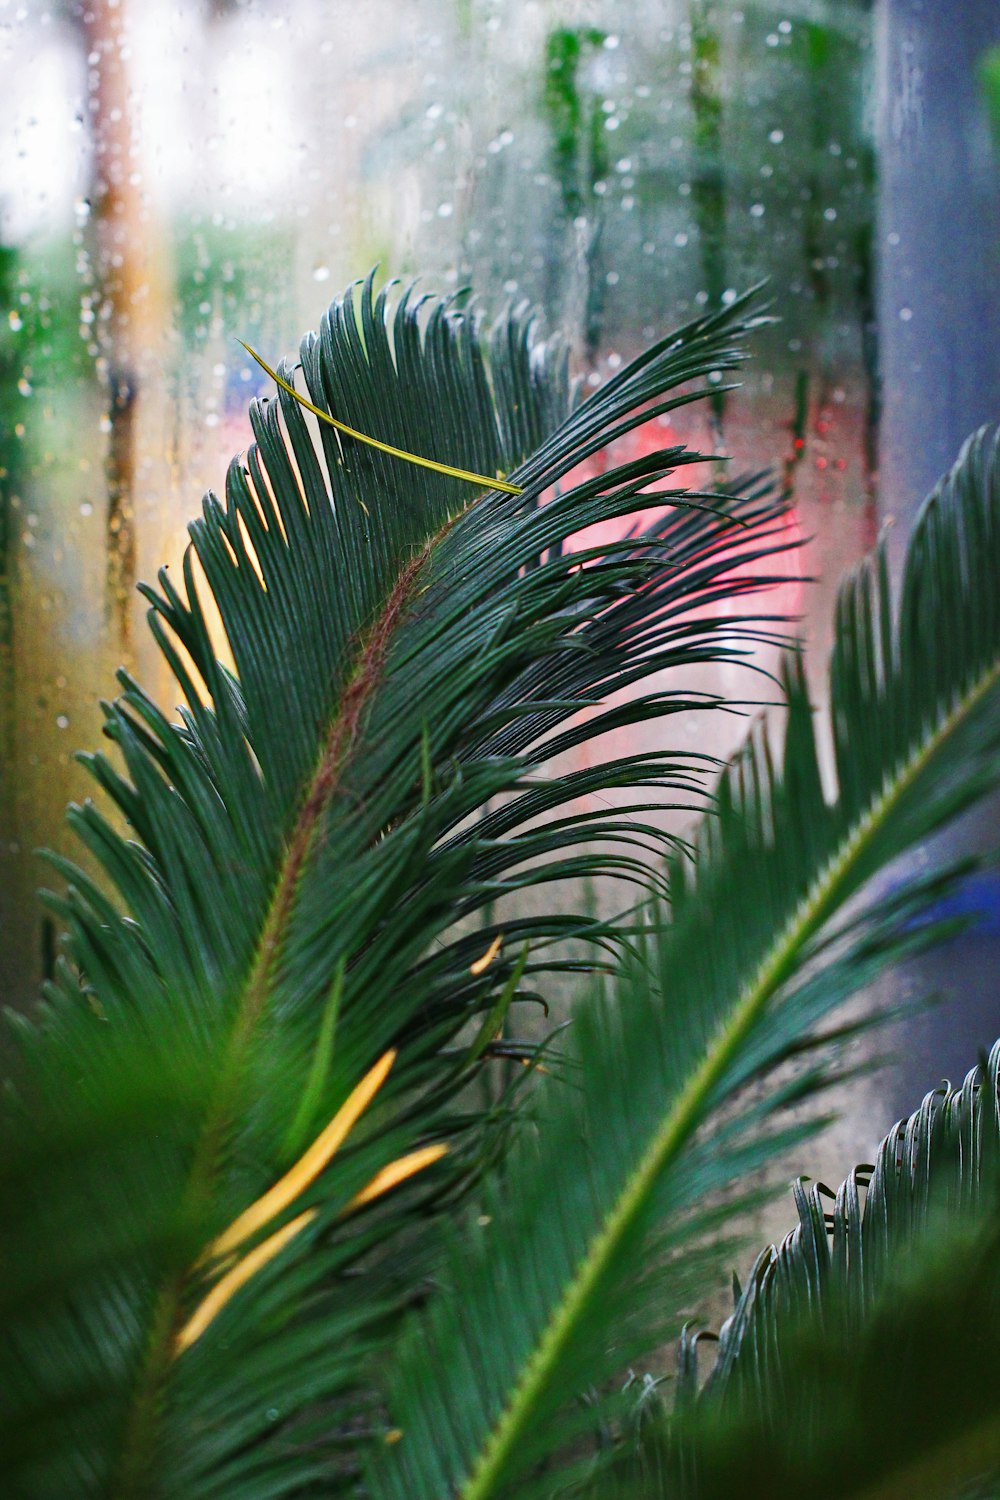 Photographie de palmier de sagoutier vert en gros plan